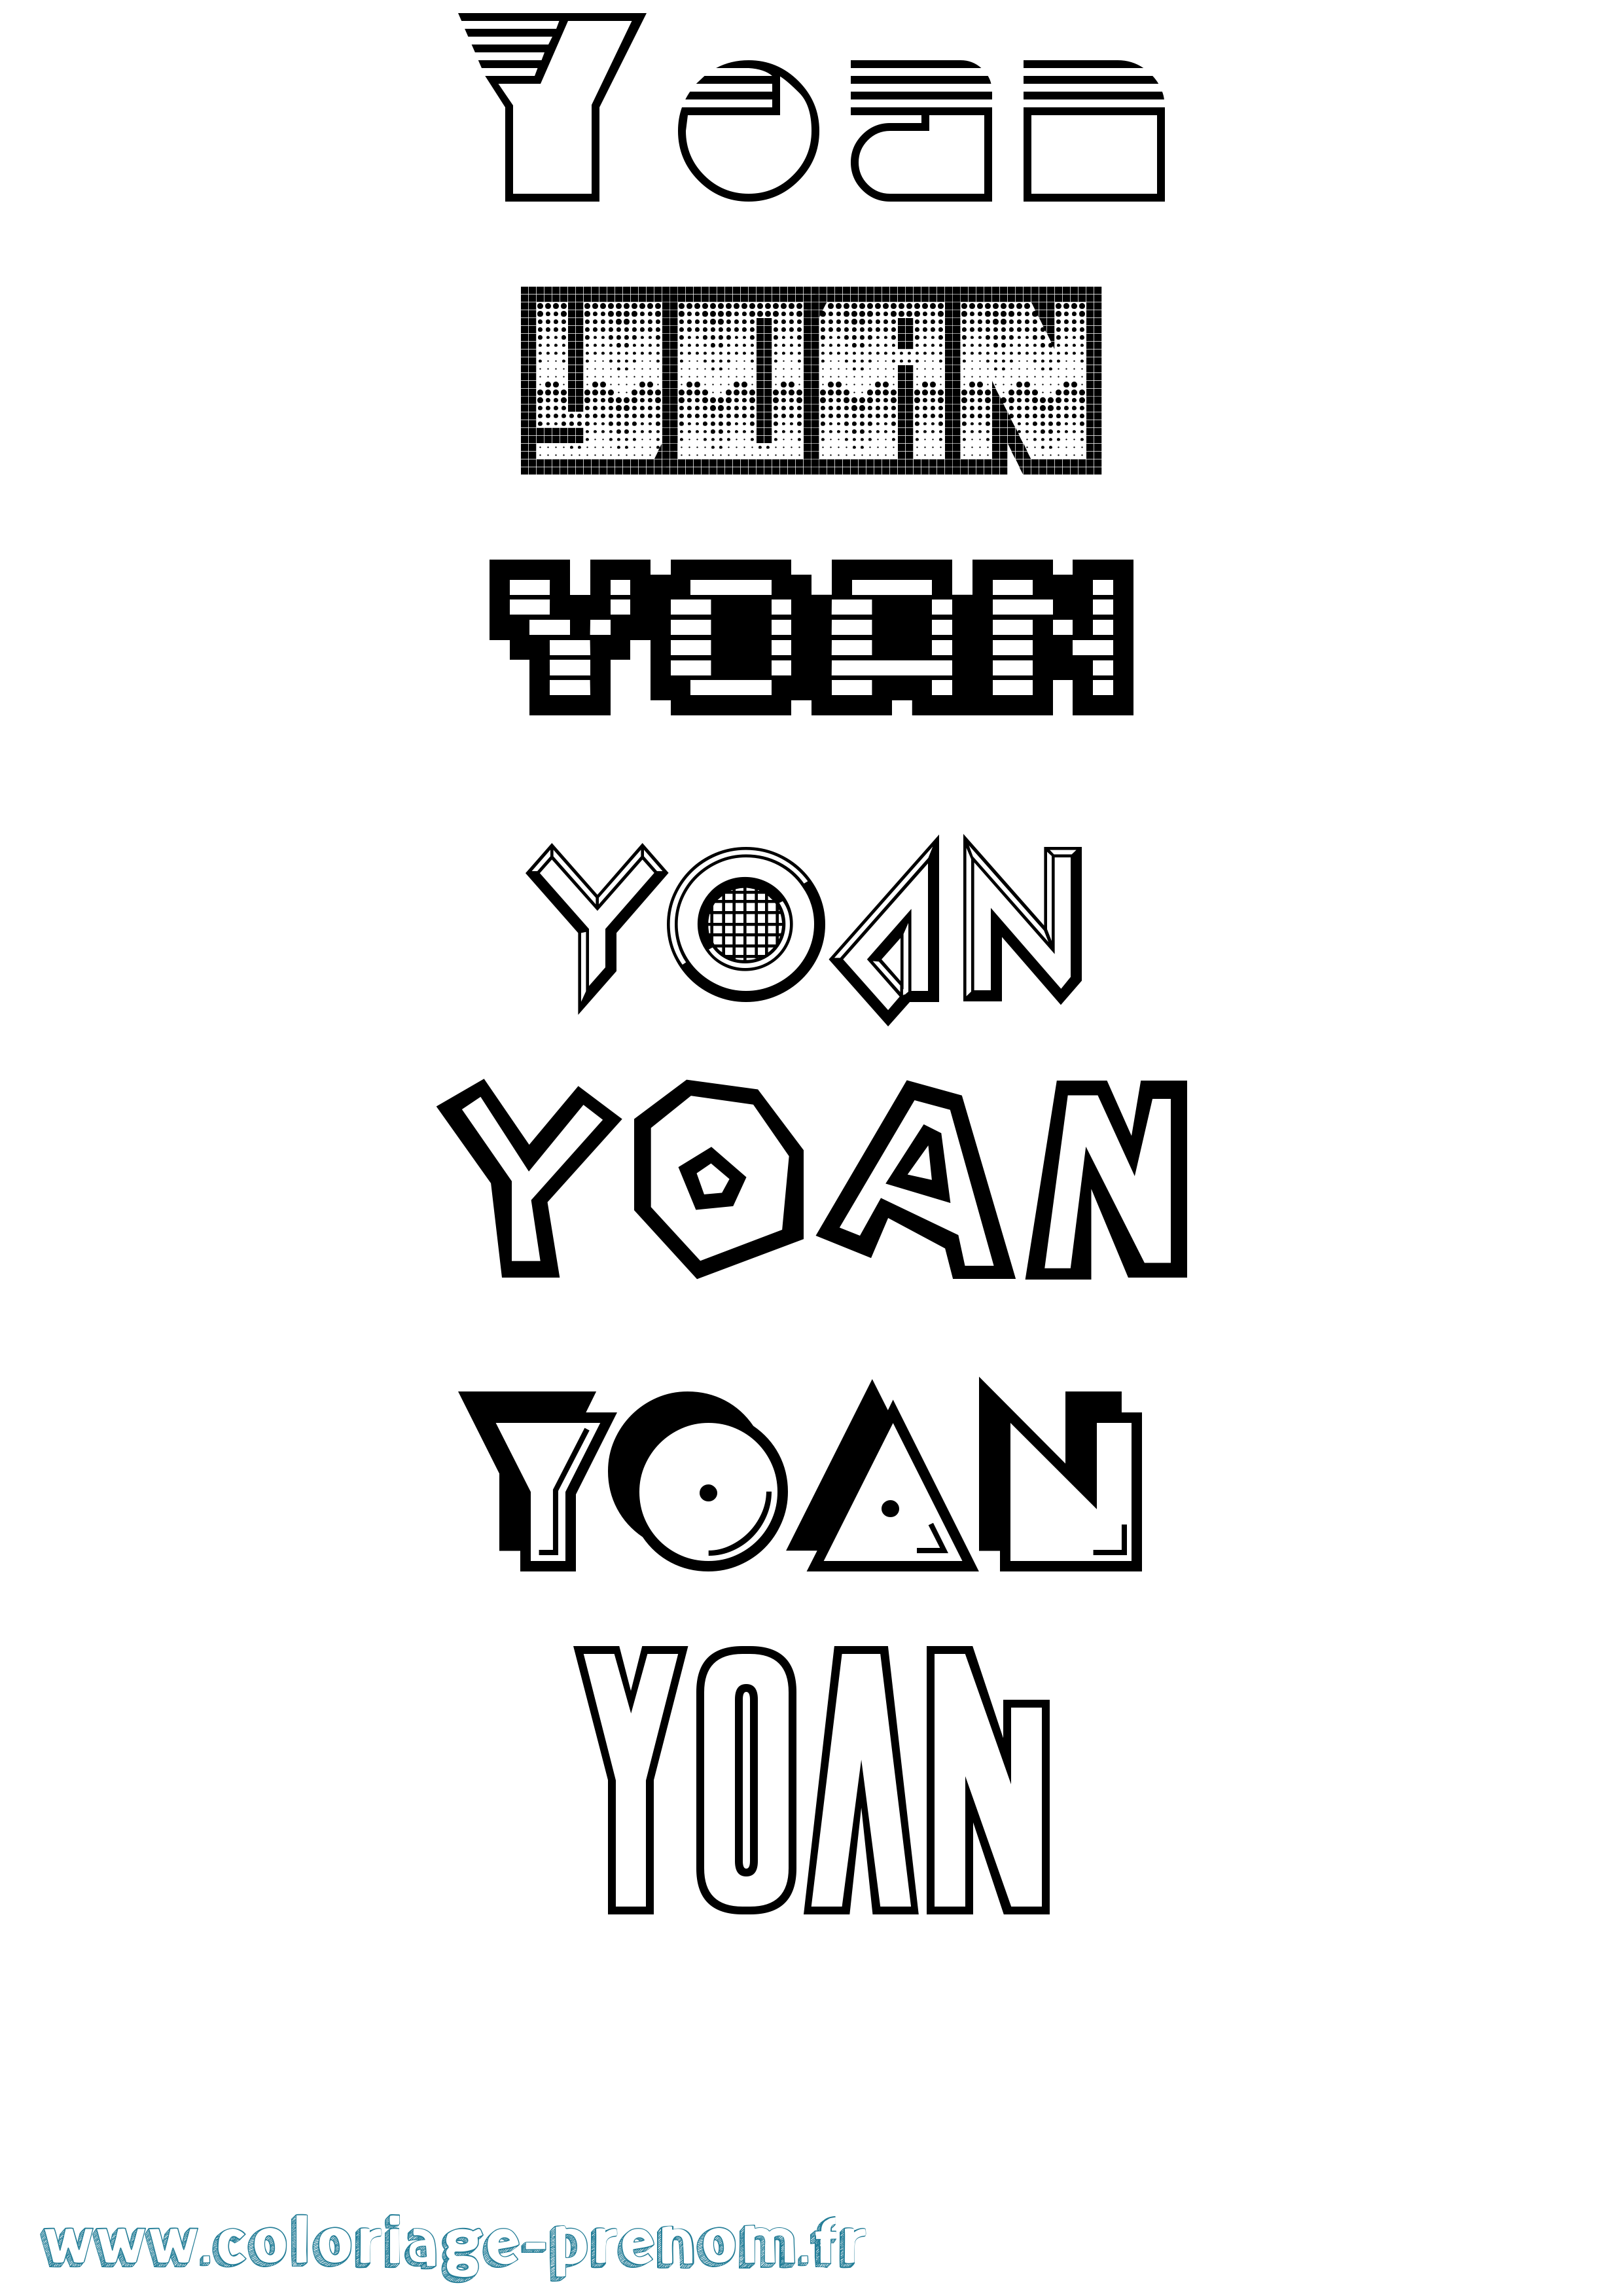 Coloriage prénom Yoan